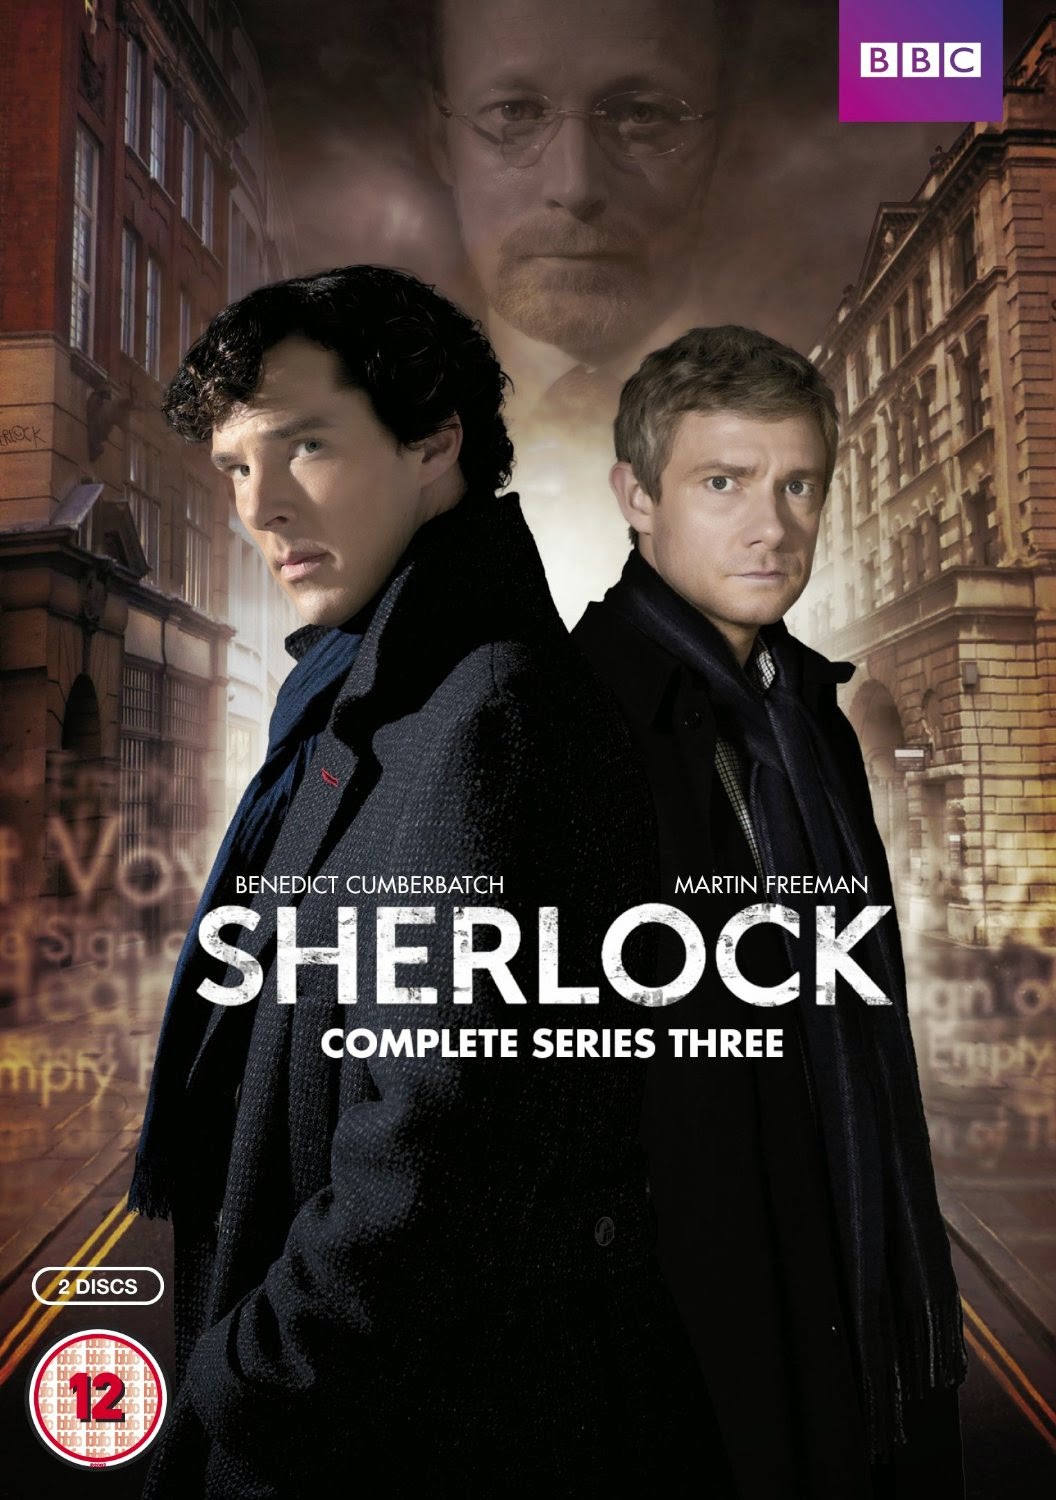 Sherlock TV series - Wikipedia